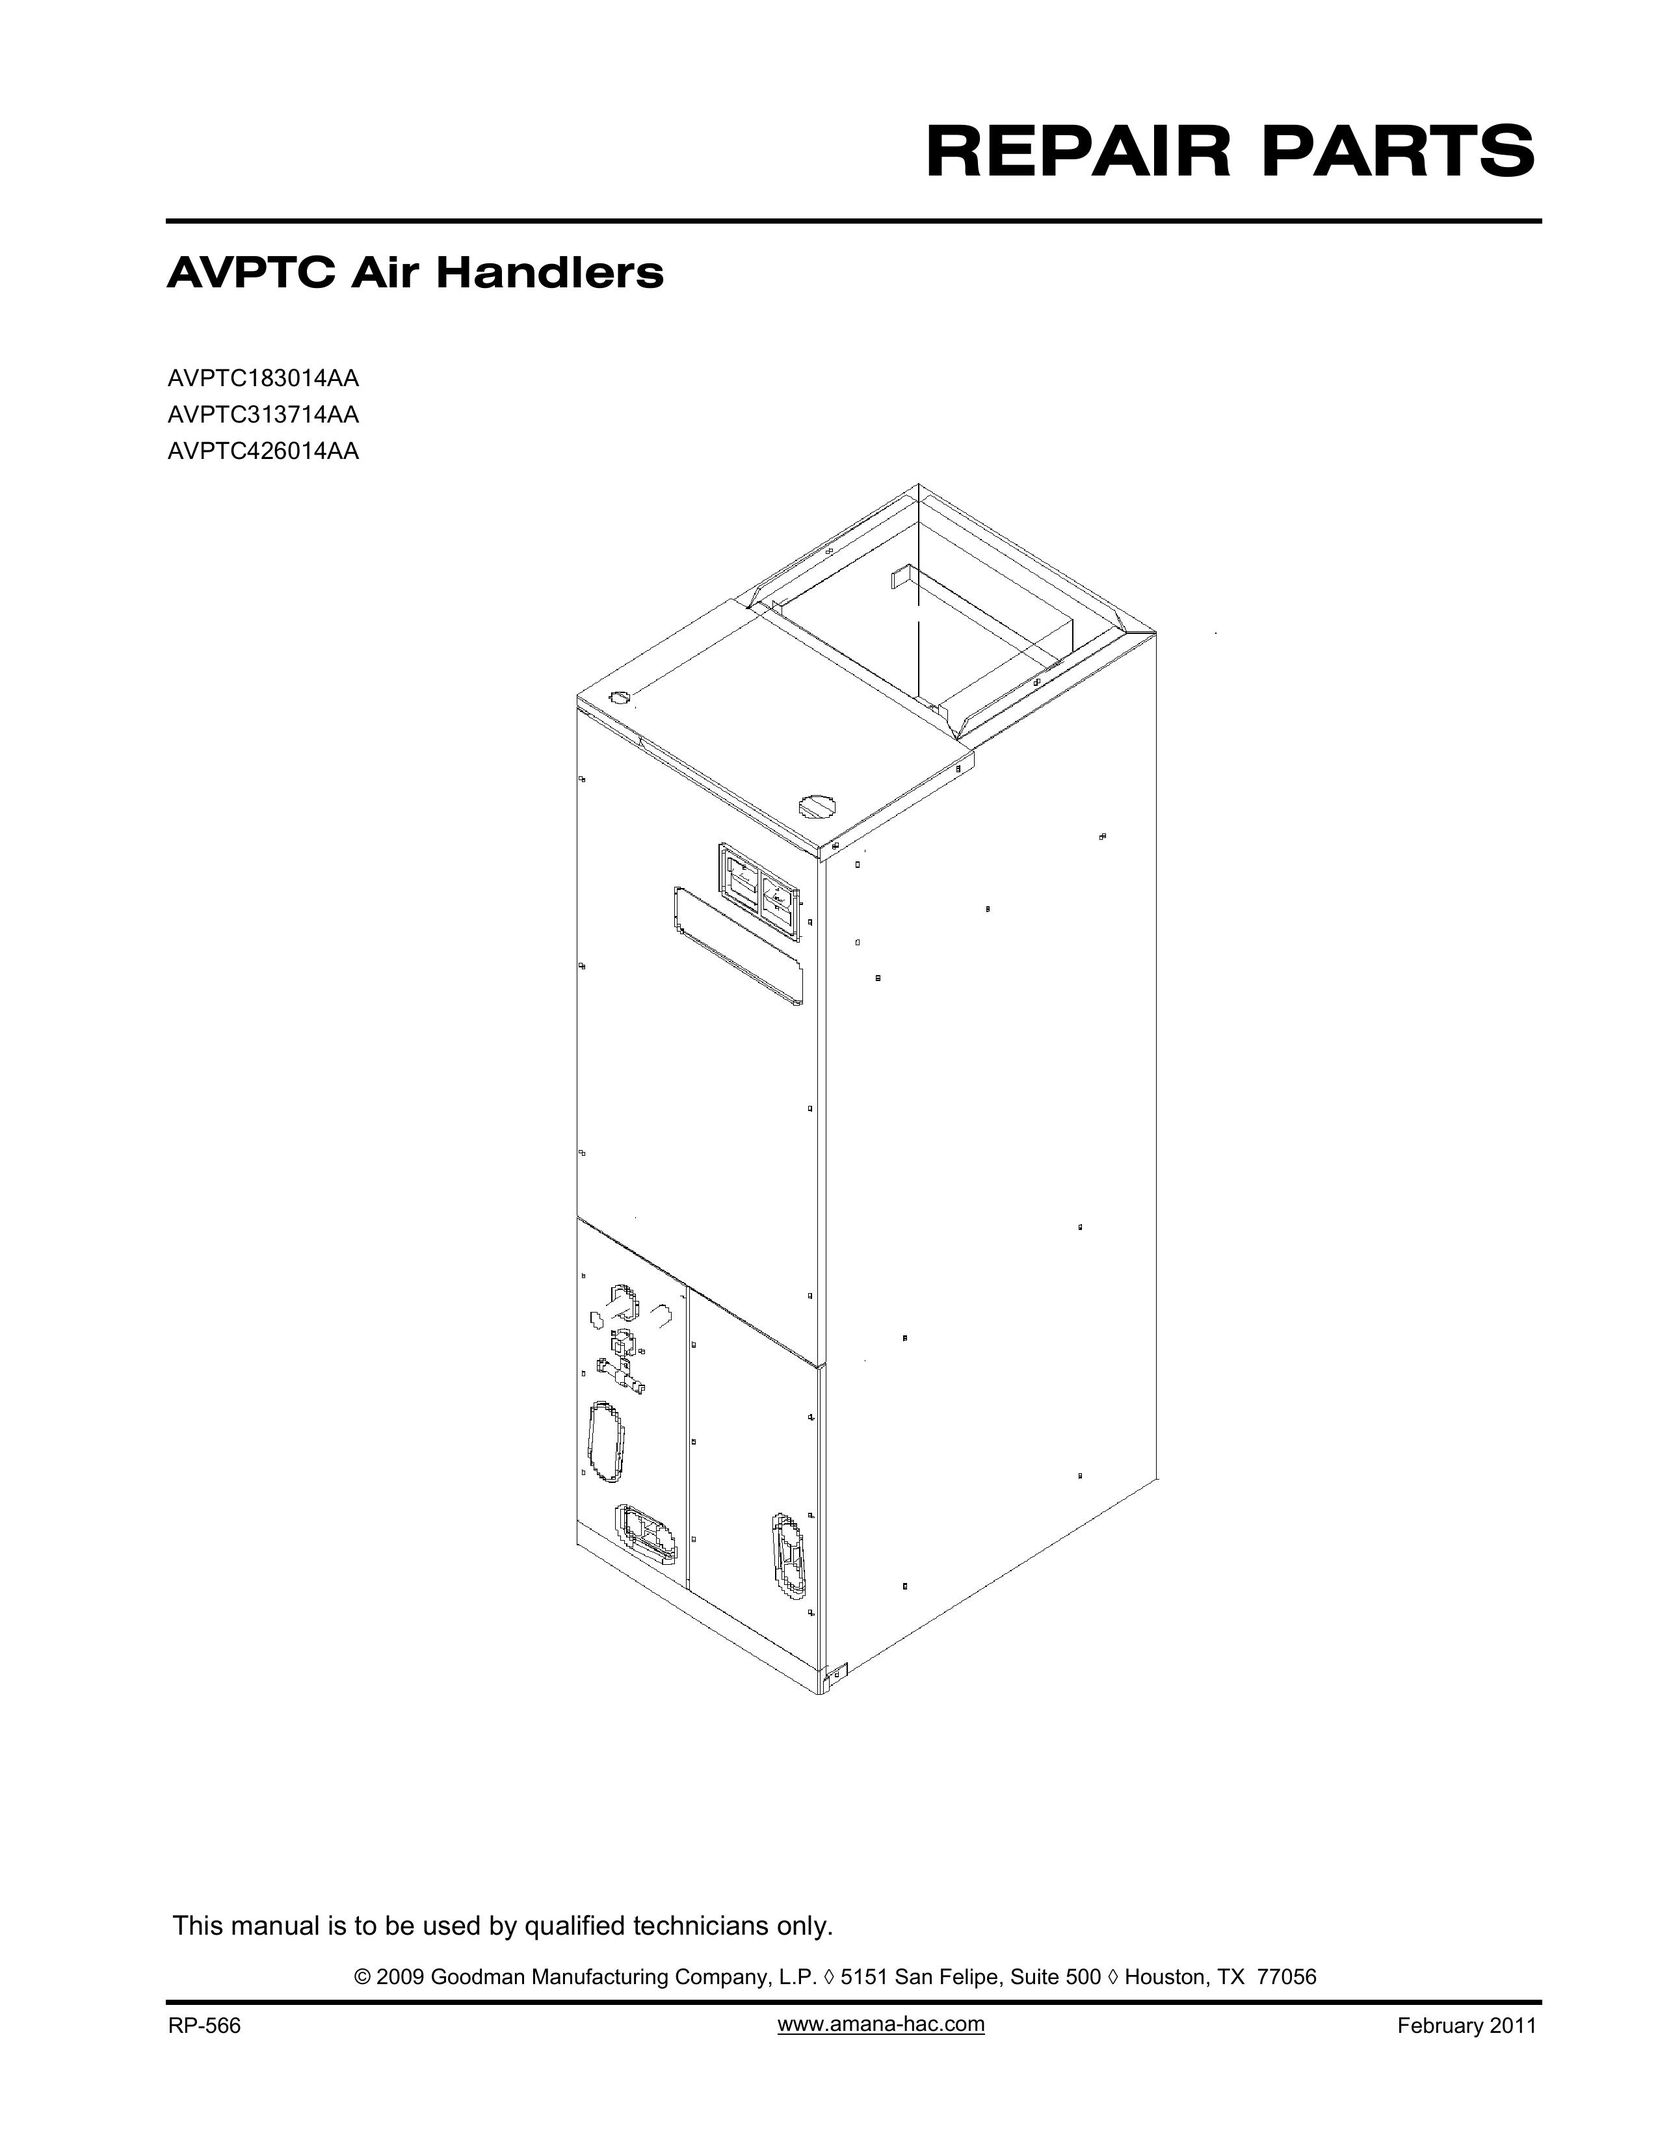 Goodman Mfg AVPTC426014AA Air Conditioner User Manual